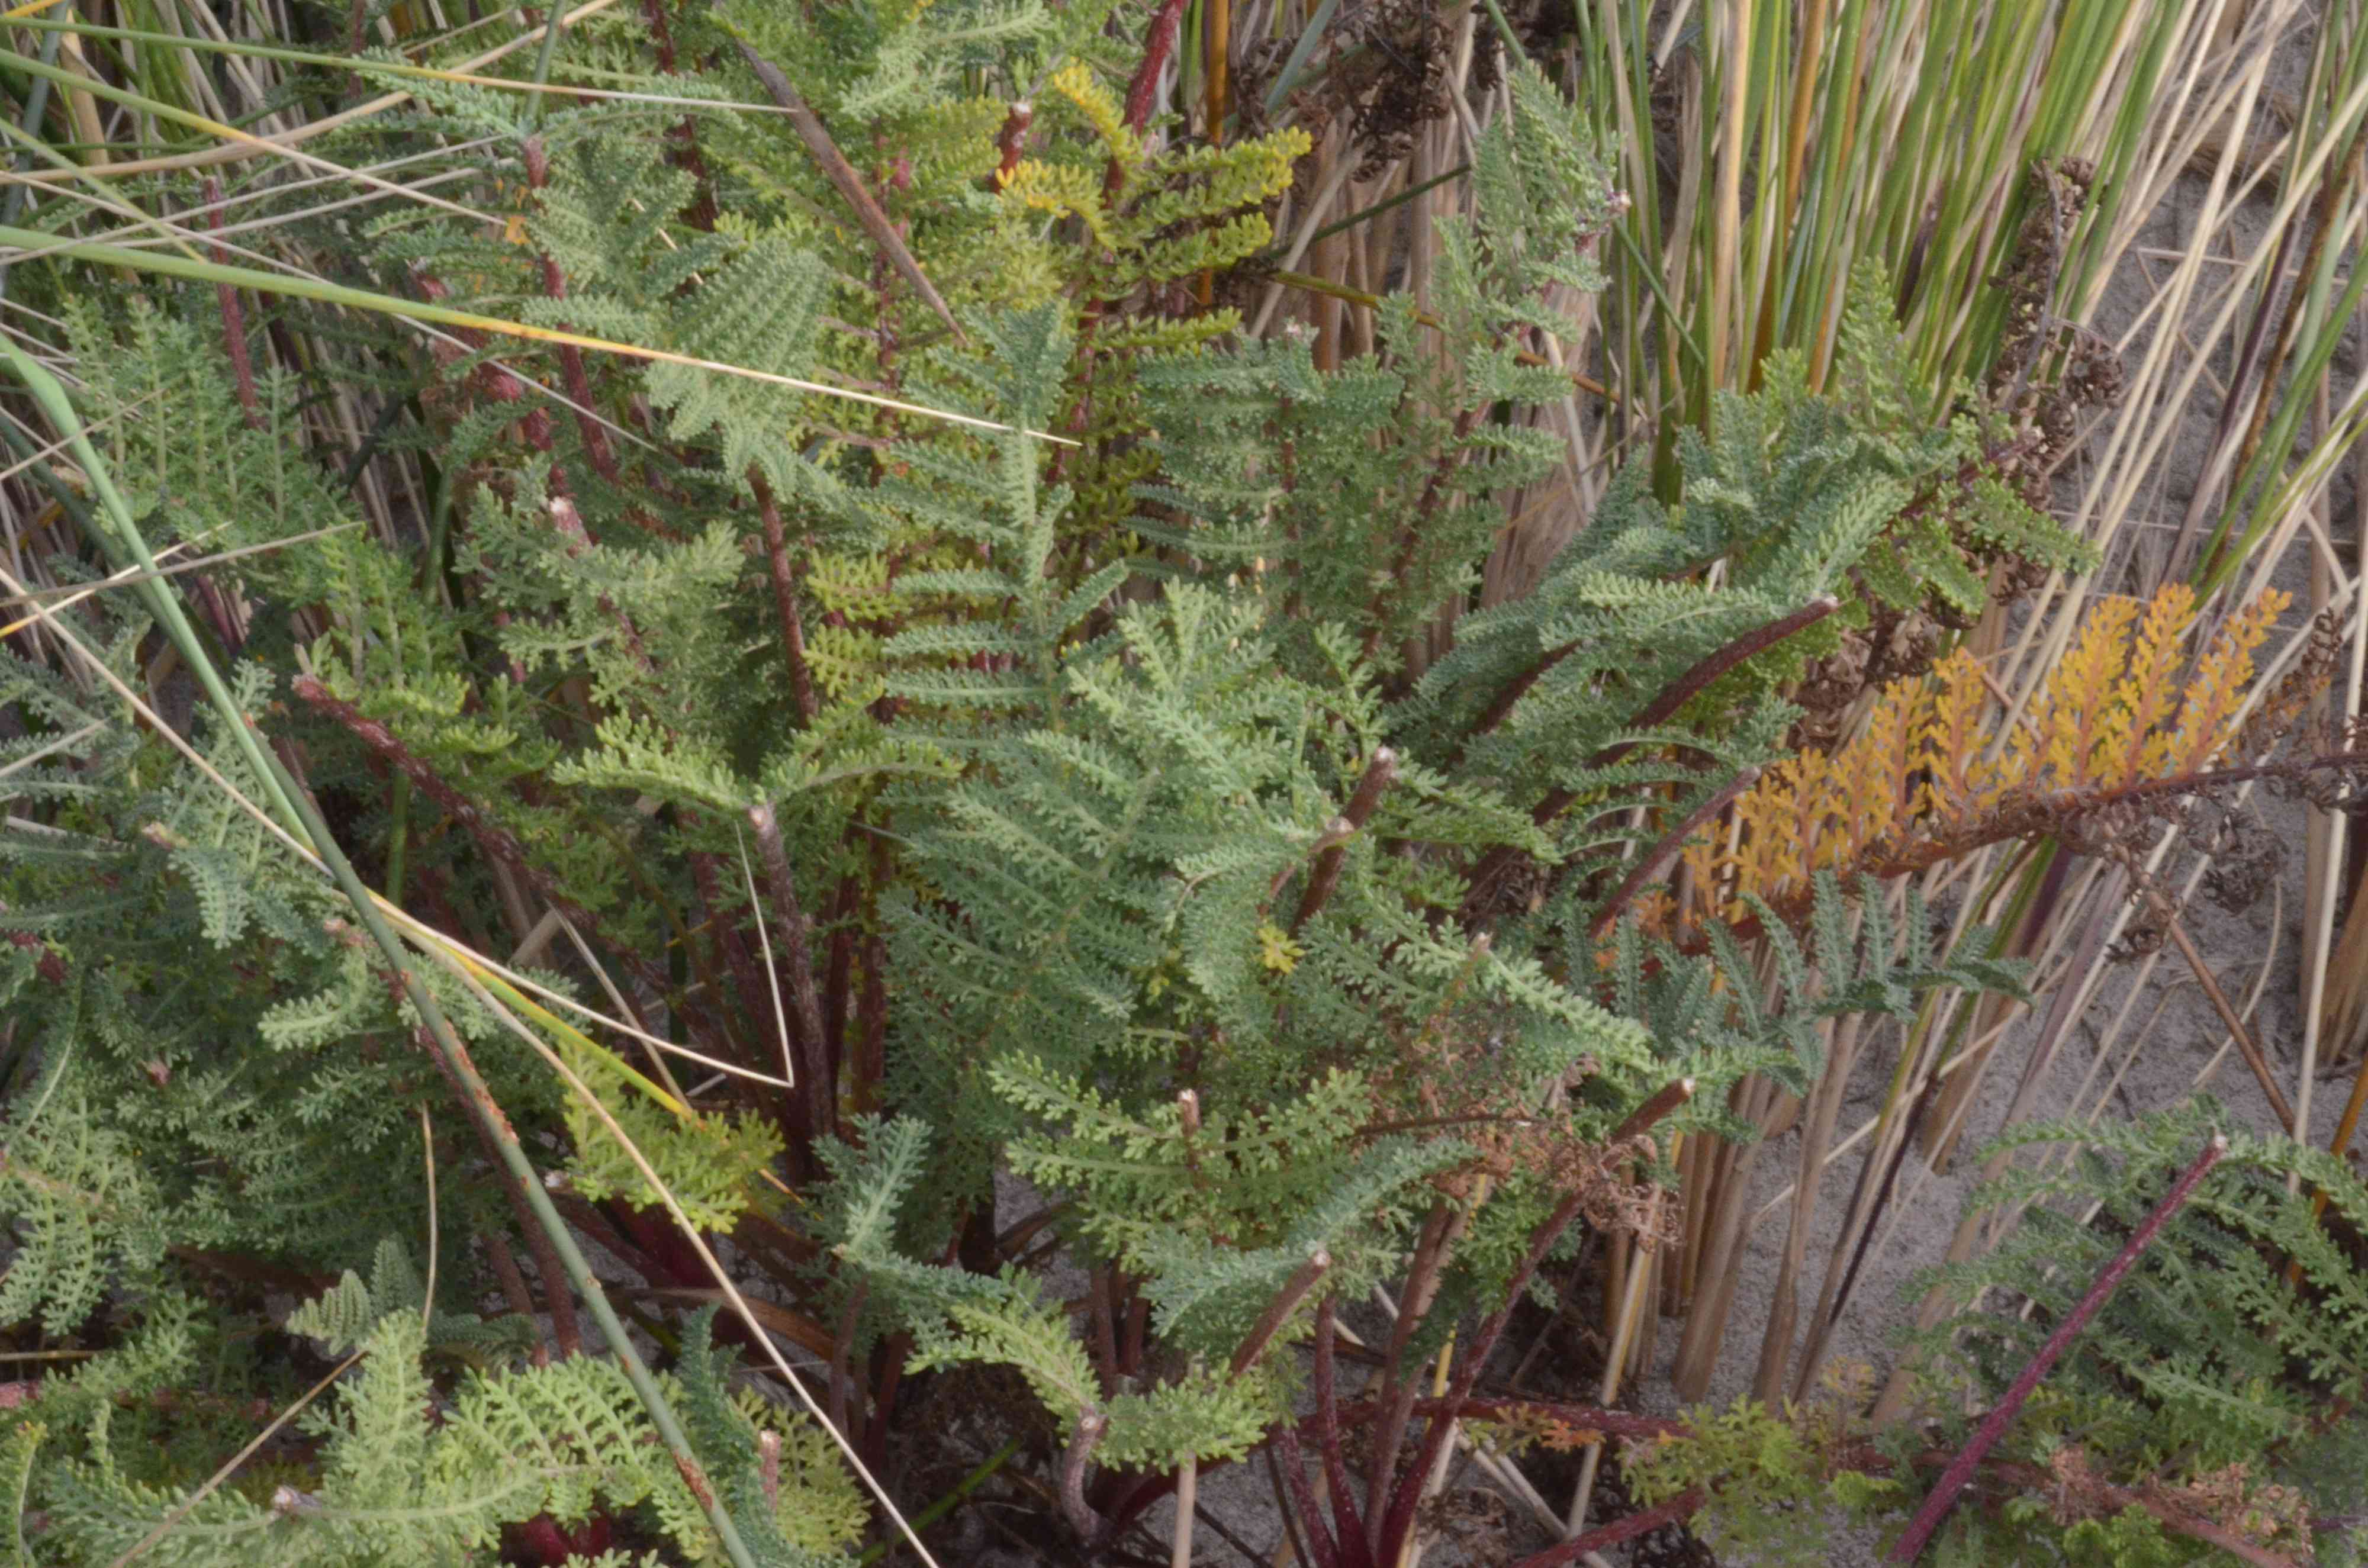 Tanacetum bipinnatum with evidence of browsing.